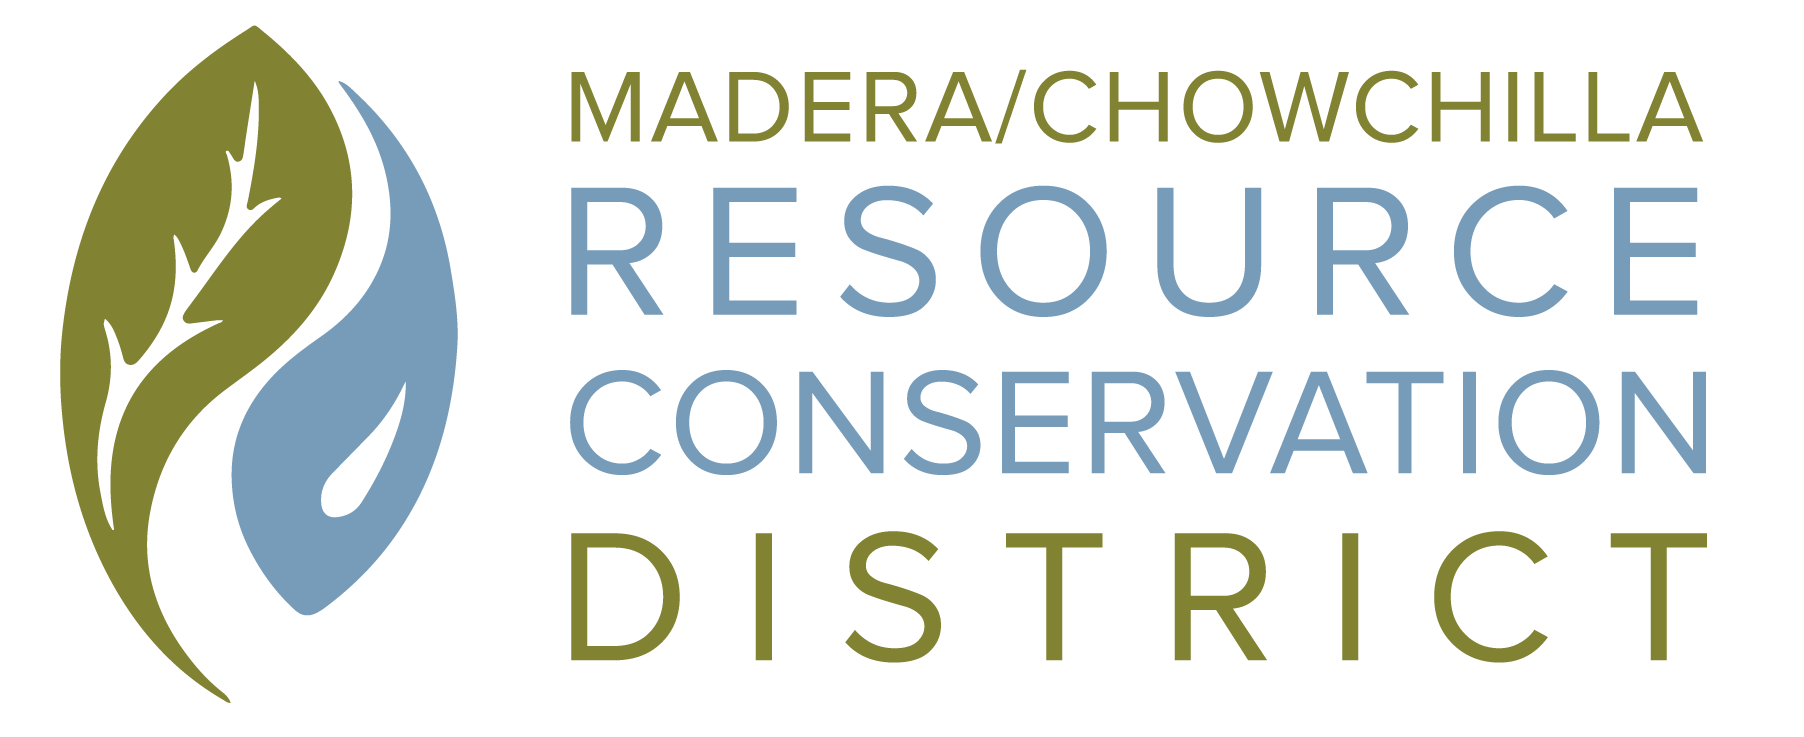 Madera/Chowchilla Resource Conservation District